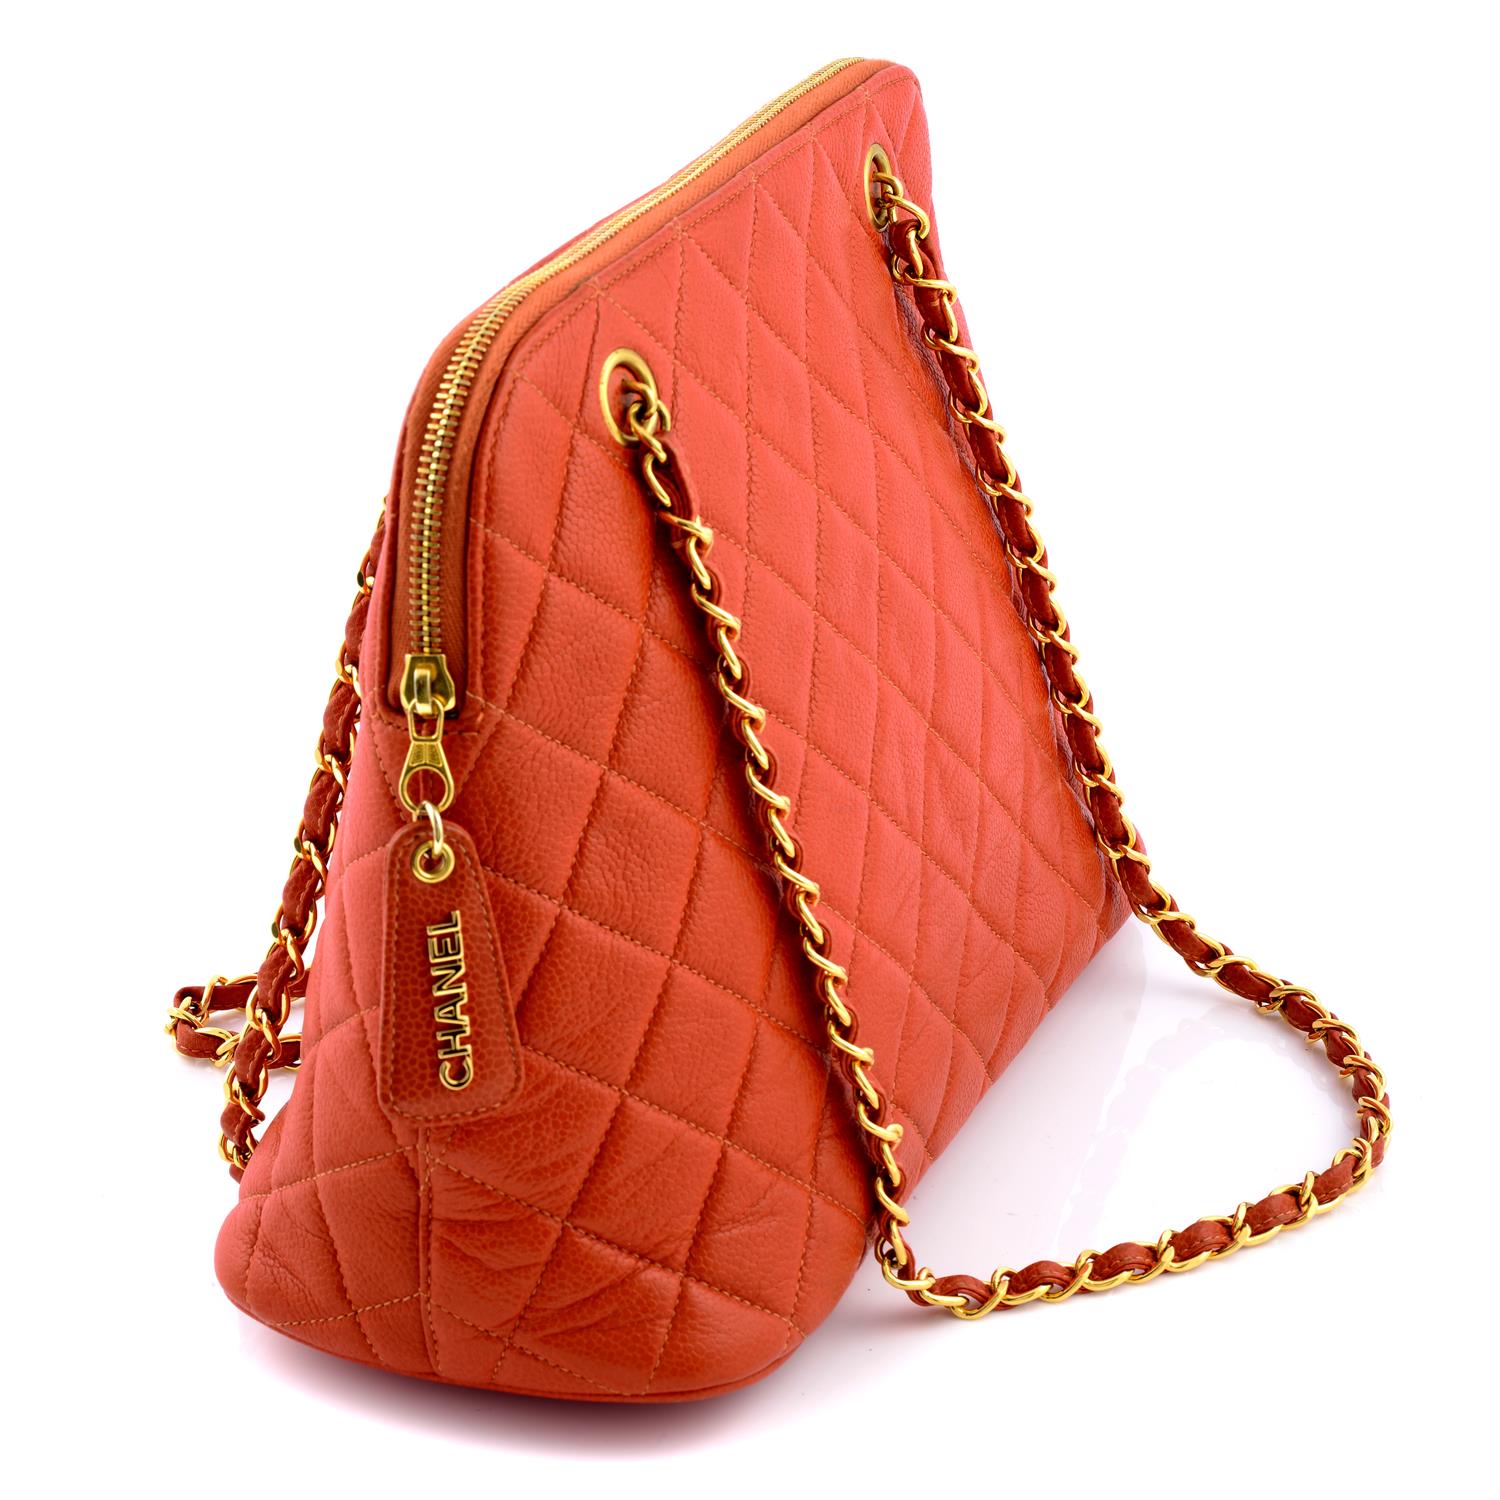 CHANEL - an orange caviar leather handbag. - Image 3 of 5